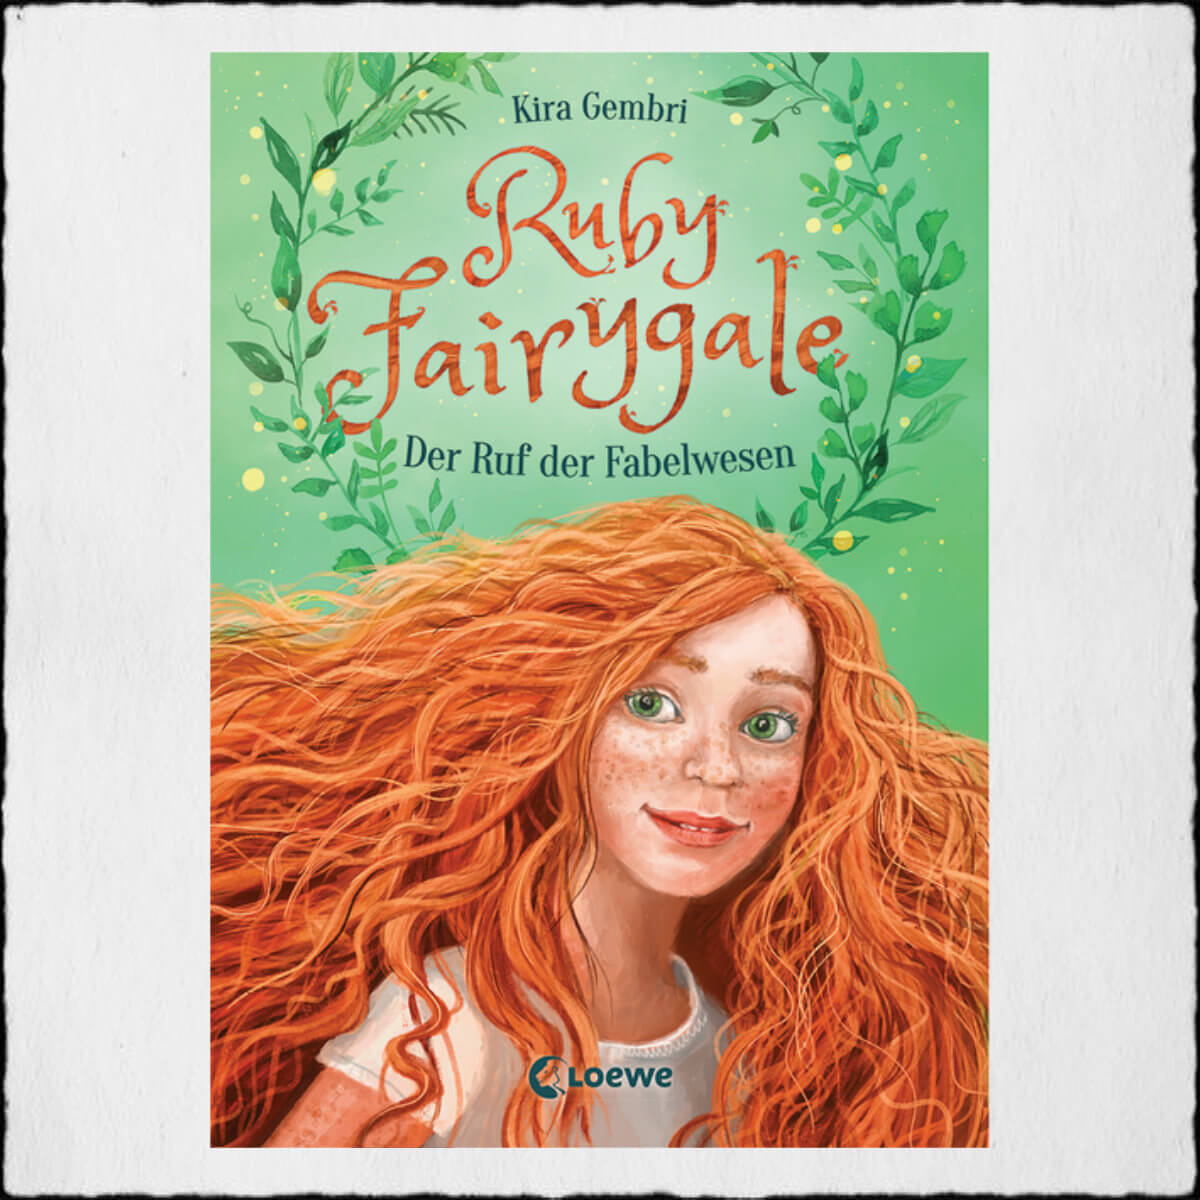 Kira Gembri "Ruby Fairygale - Der Ruf der Fabelwesen" ©2020 Loewe Verlag GmbH